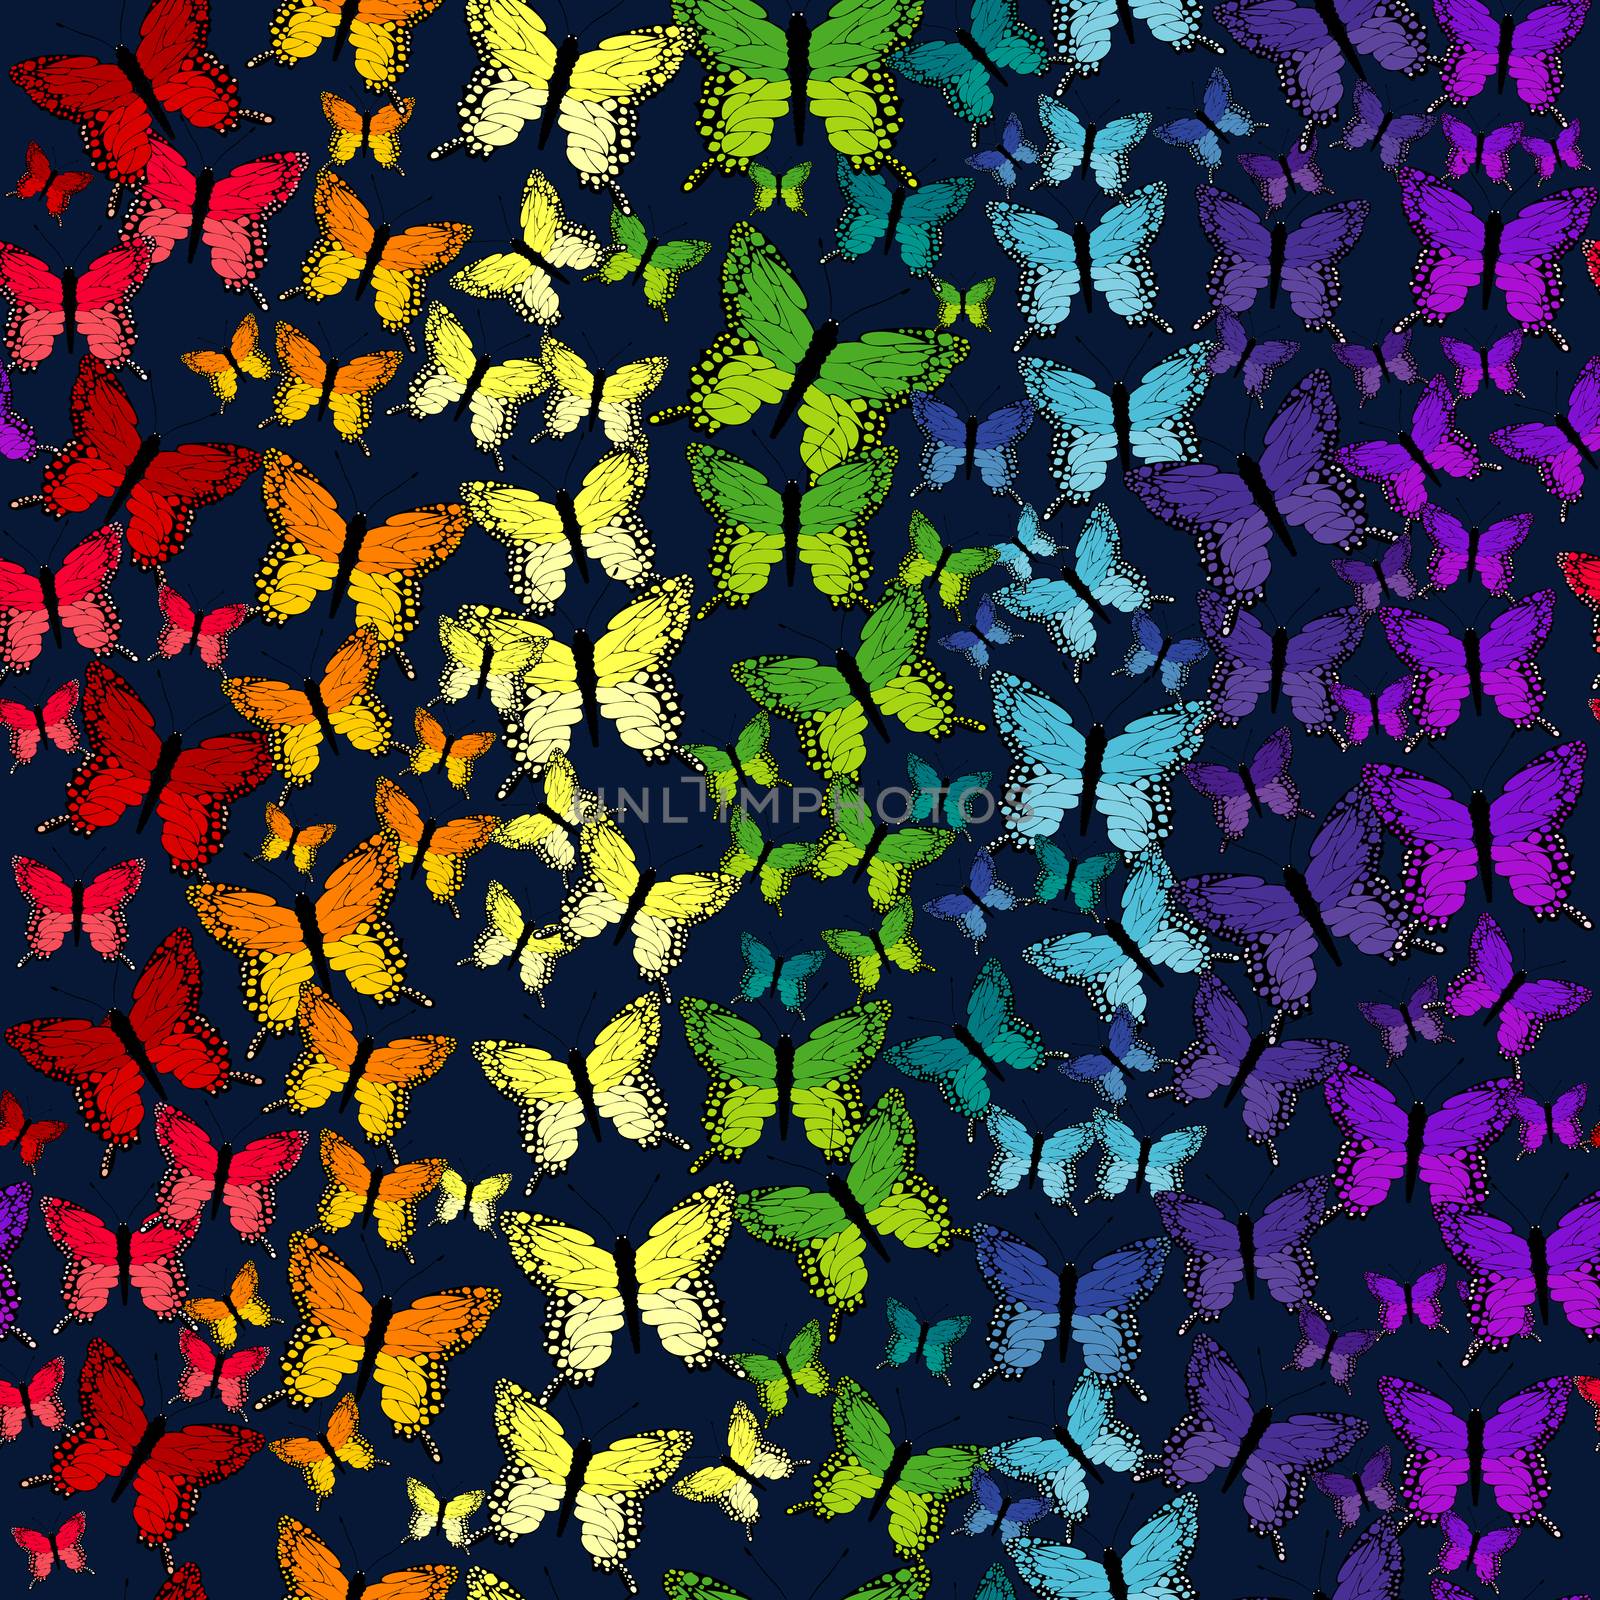 Rainbow butterflies seamless pattern over black background